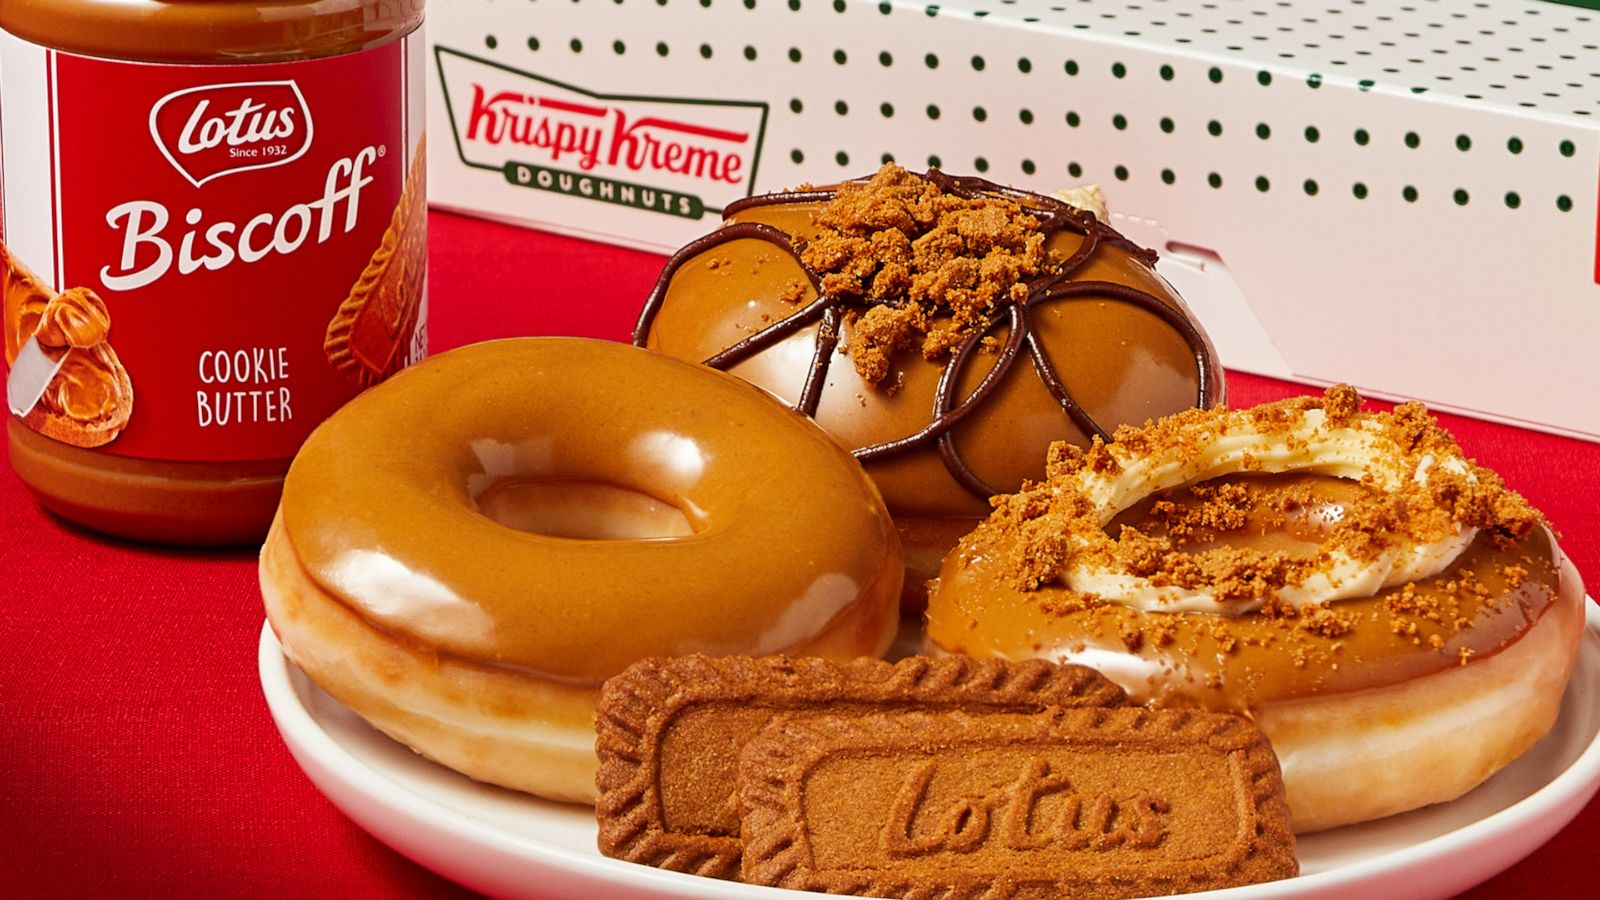 Krispy Kreme debuts 3 Biscoff cookie butter doughnuts - Good Morning America